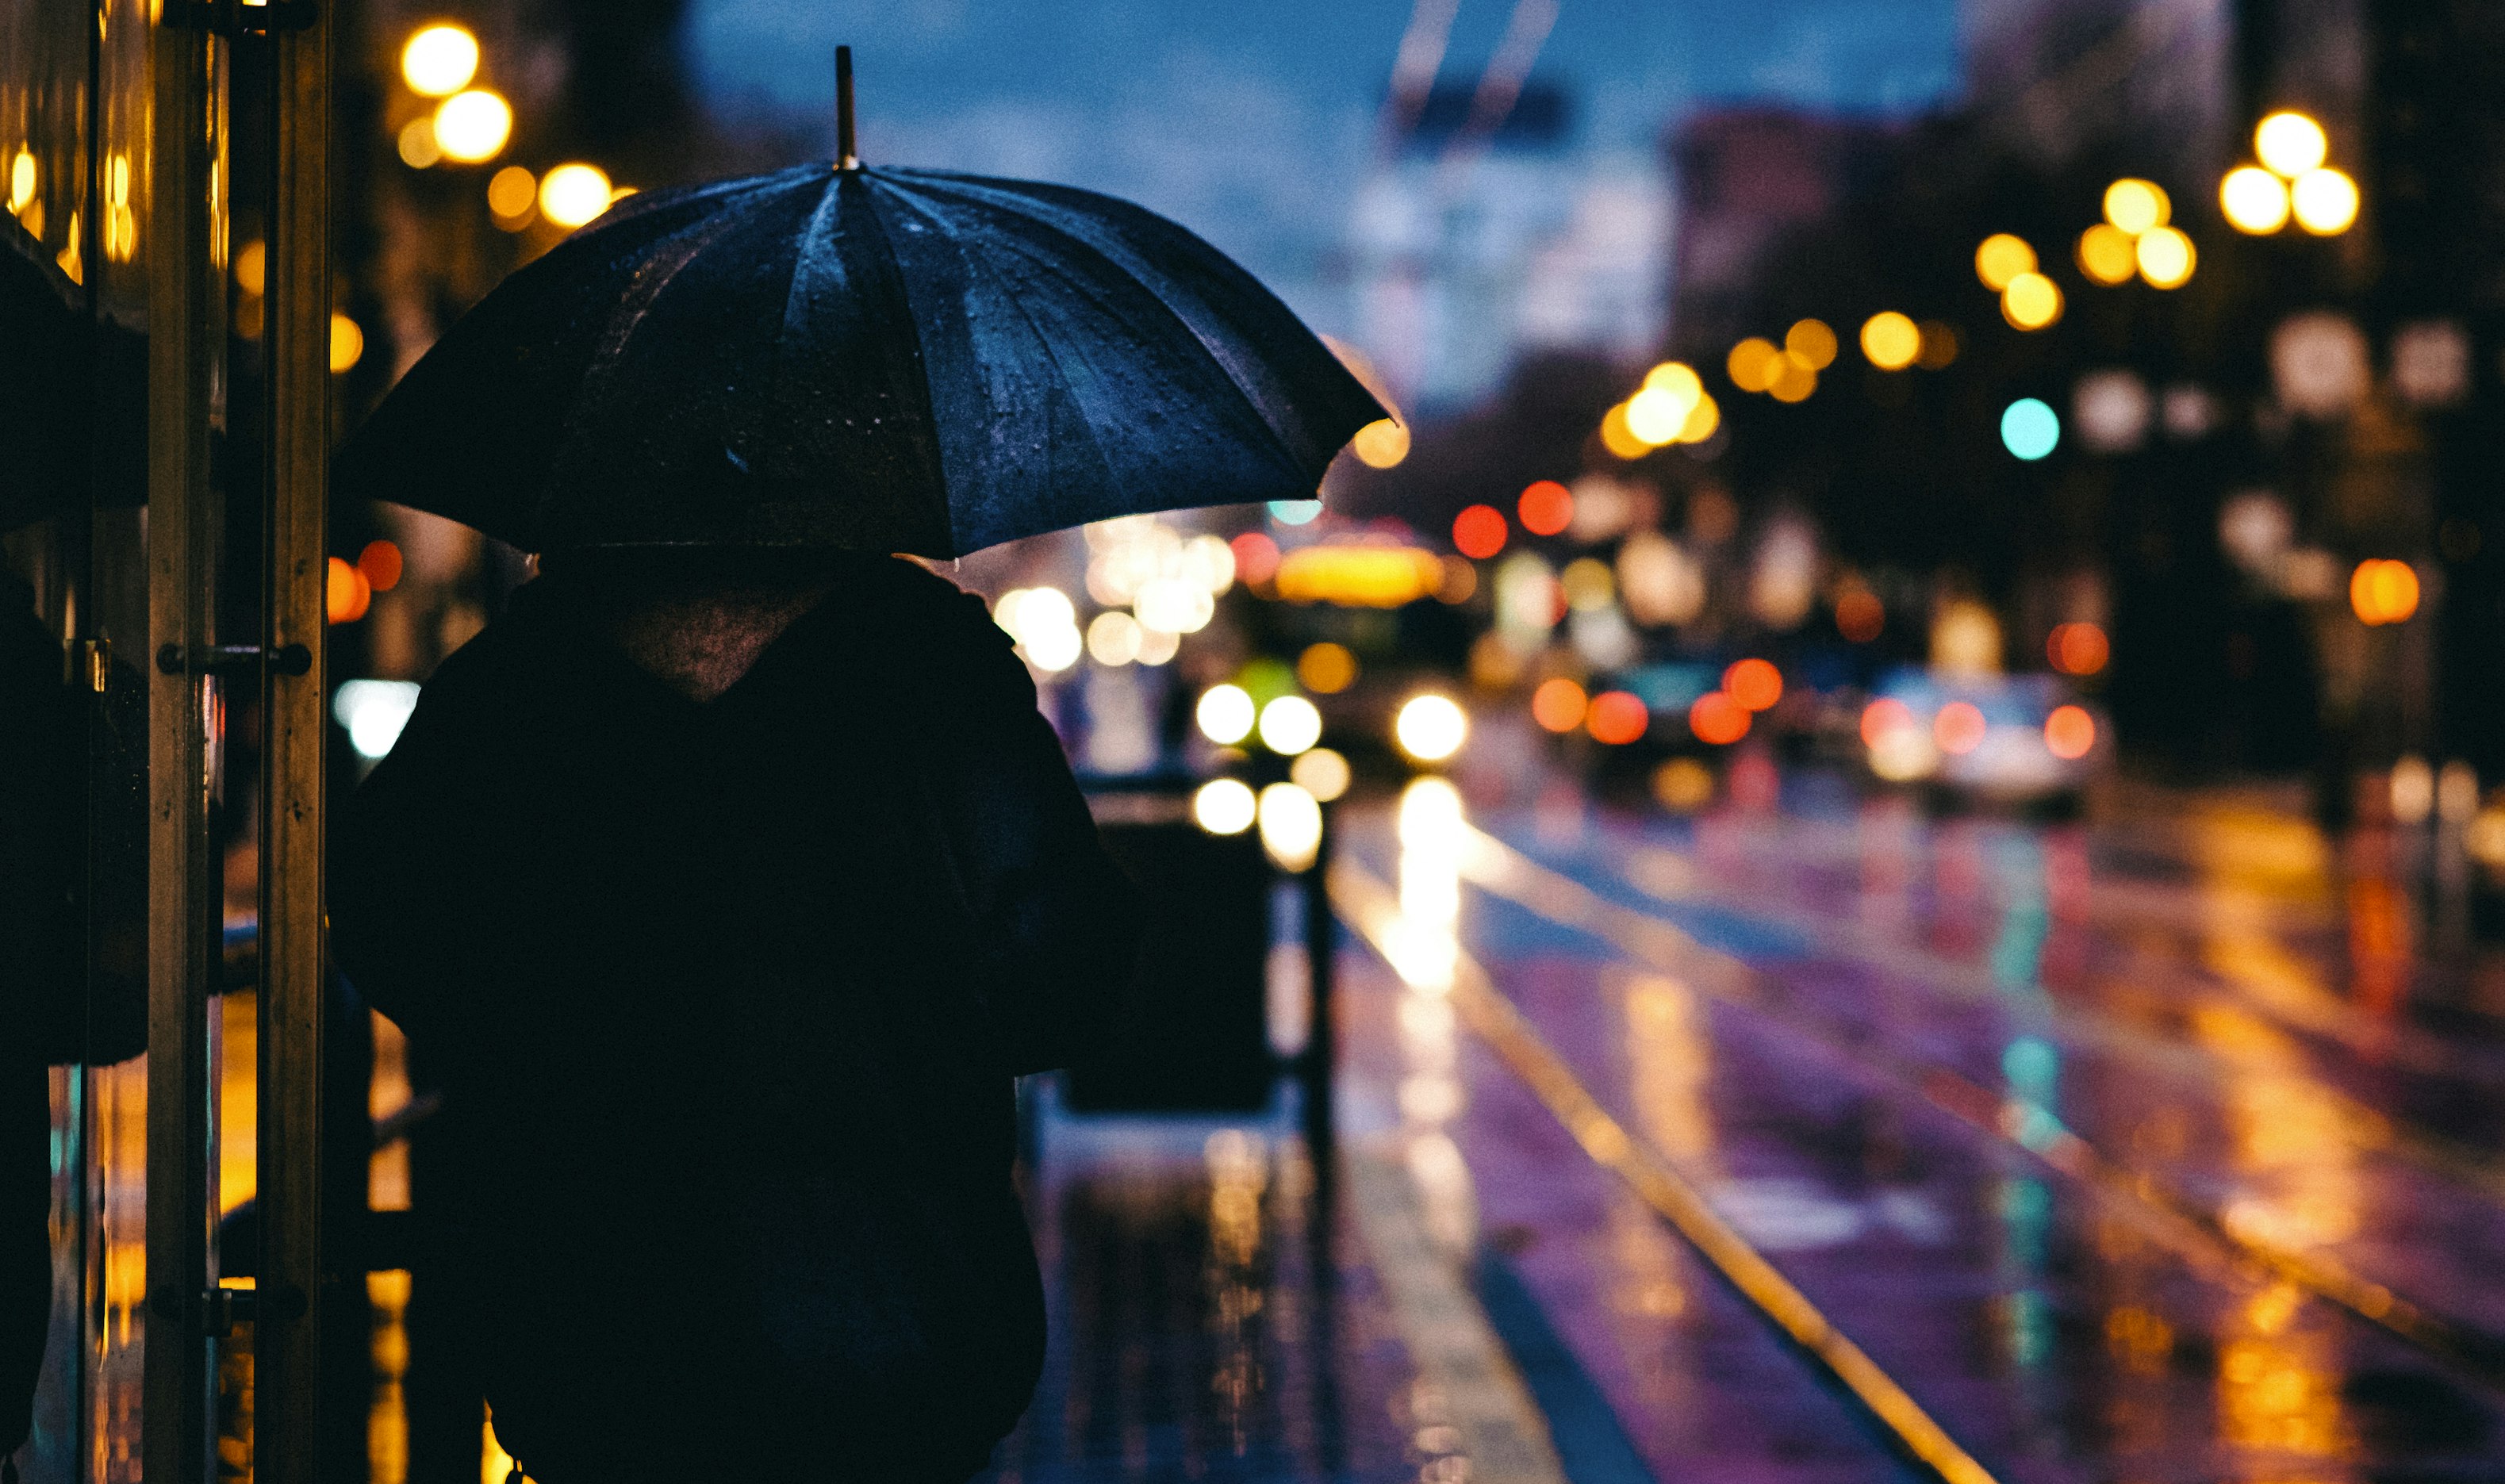 pedestrians walking on street on a rainy night with umbrellas